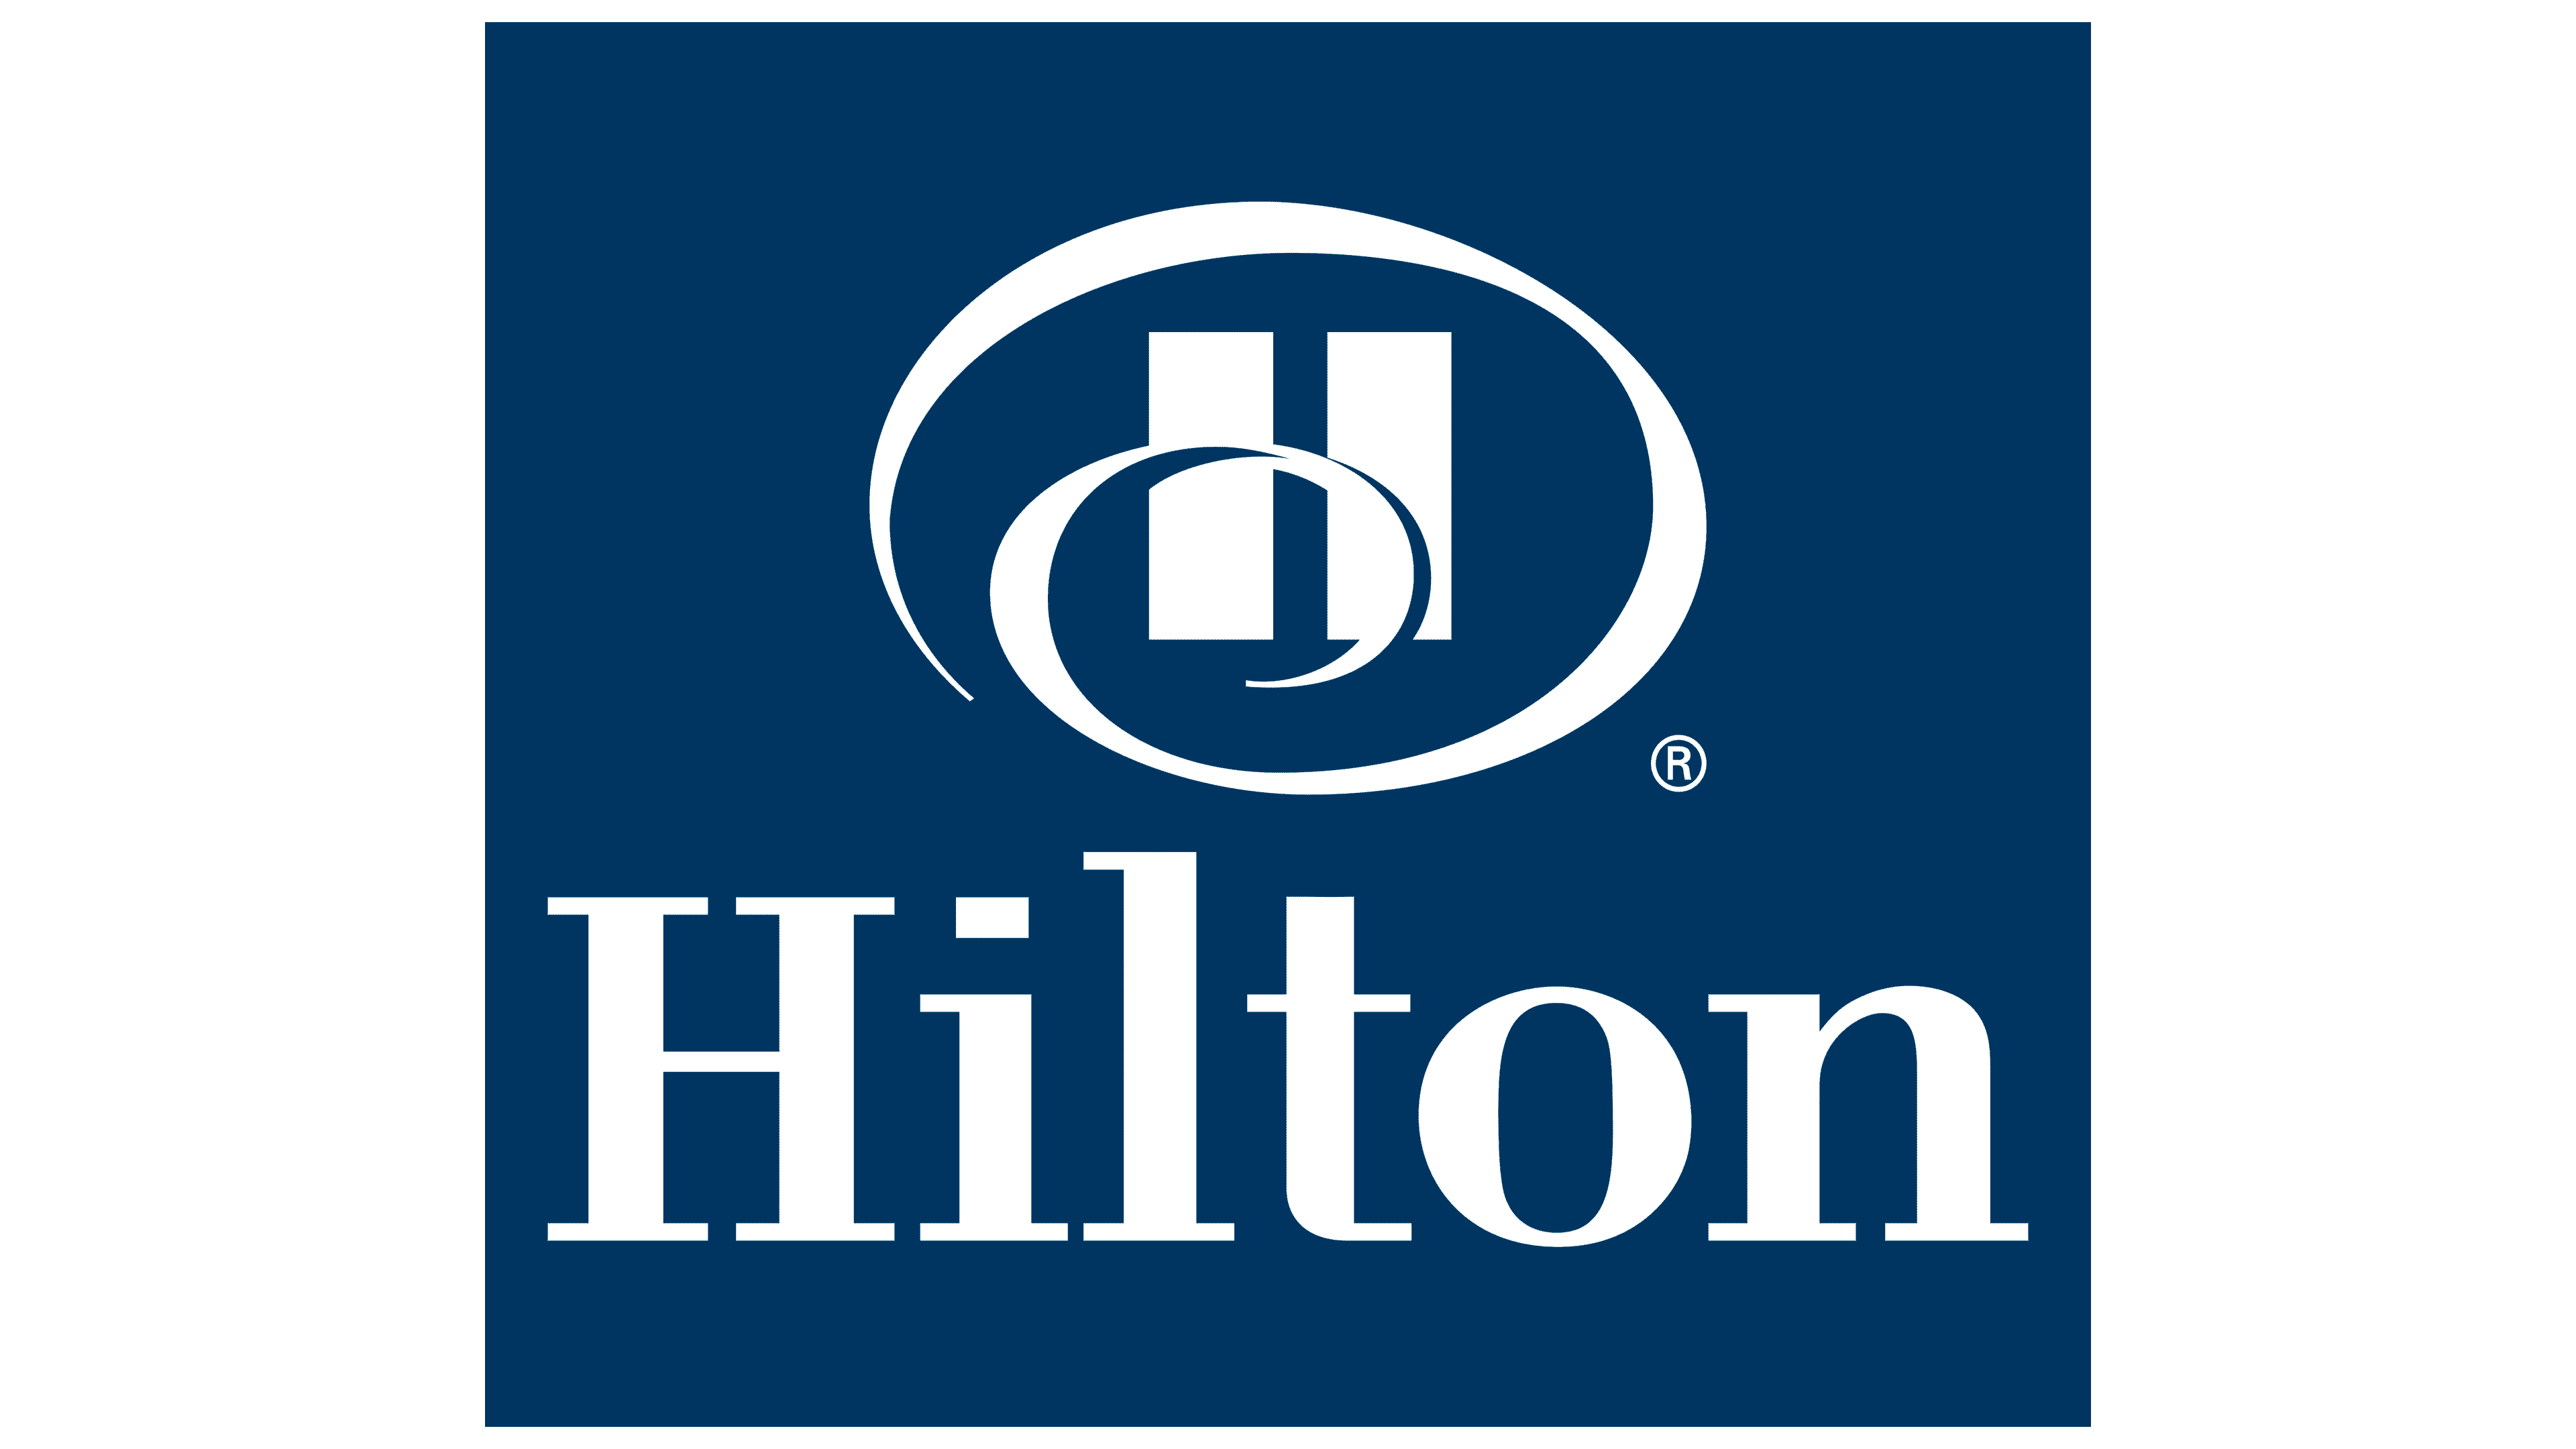 Hilton Logo No Background